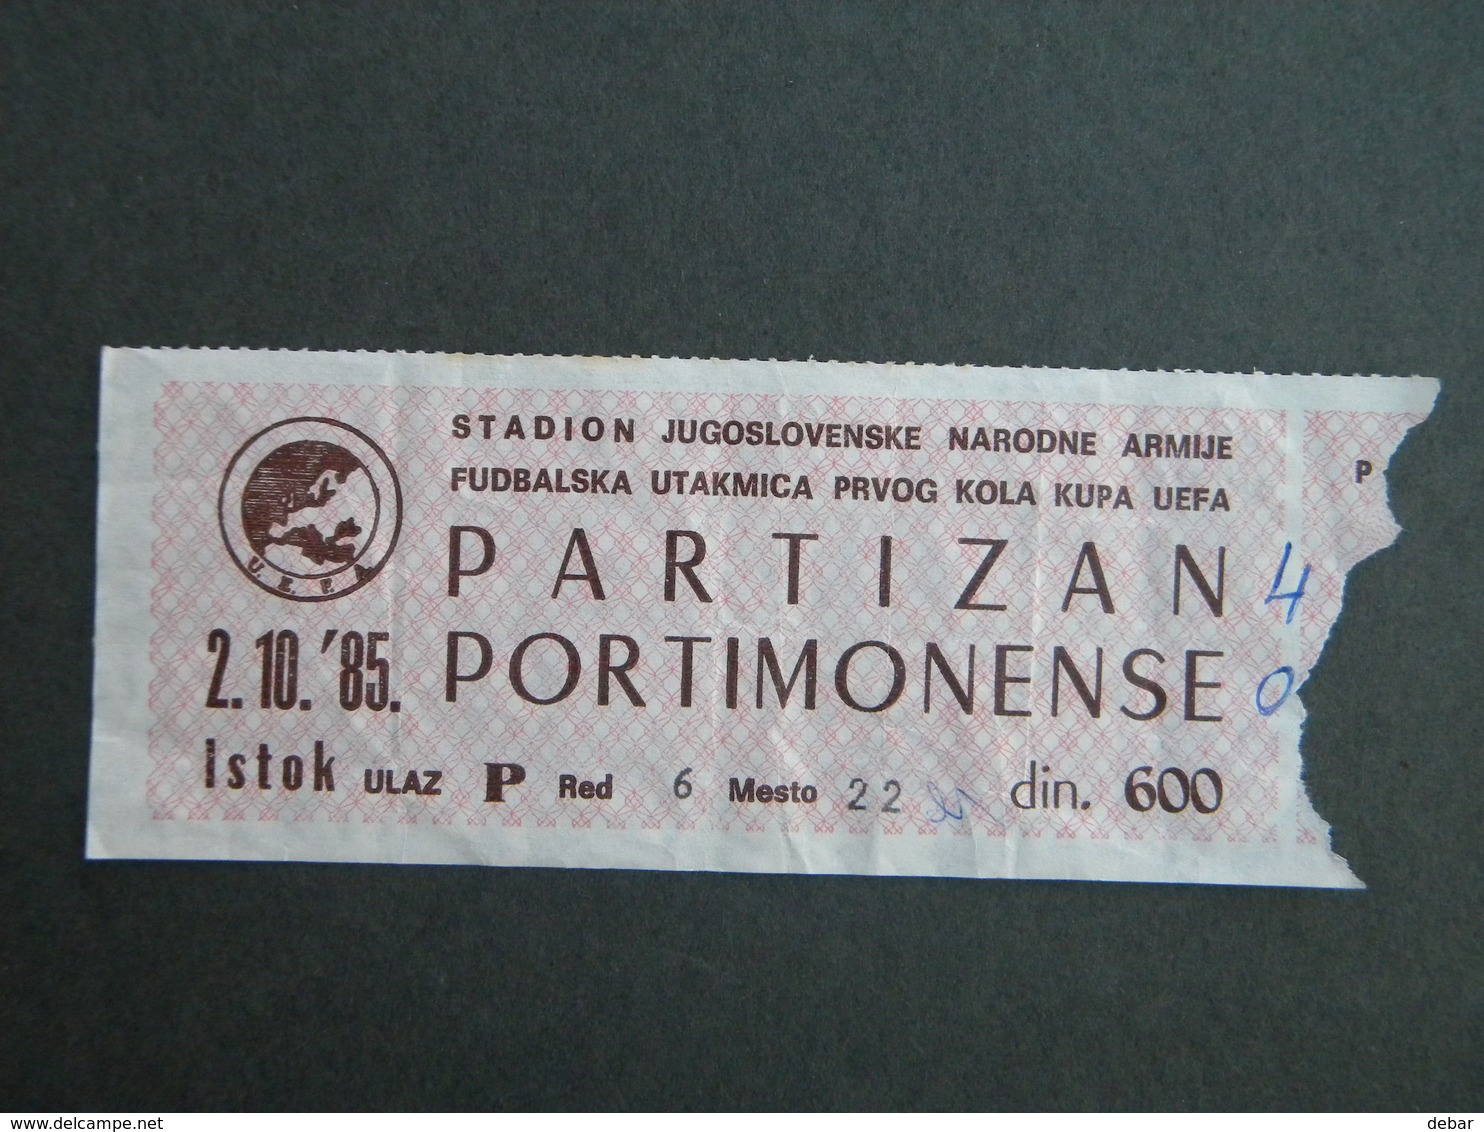 MATCH TICKETS - PARTIZAN - PORTIMONENSE -1985 - KUP - UEFA - Match Tickets